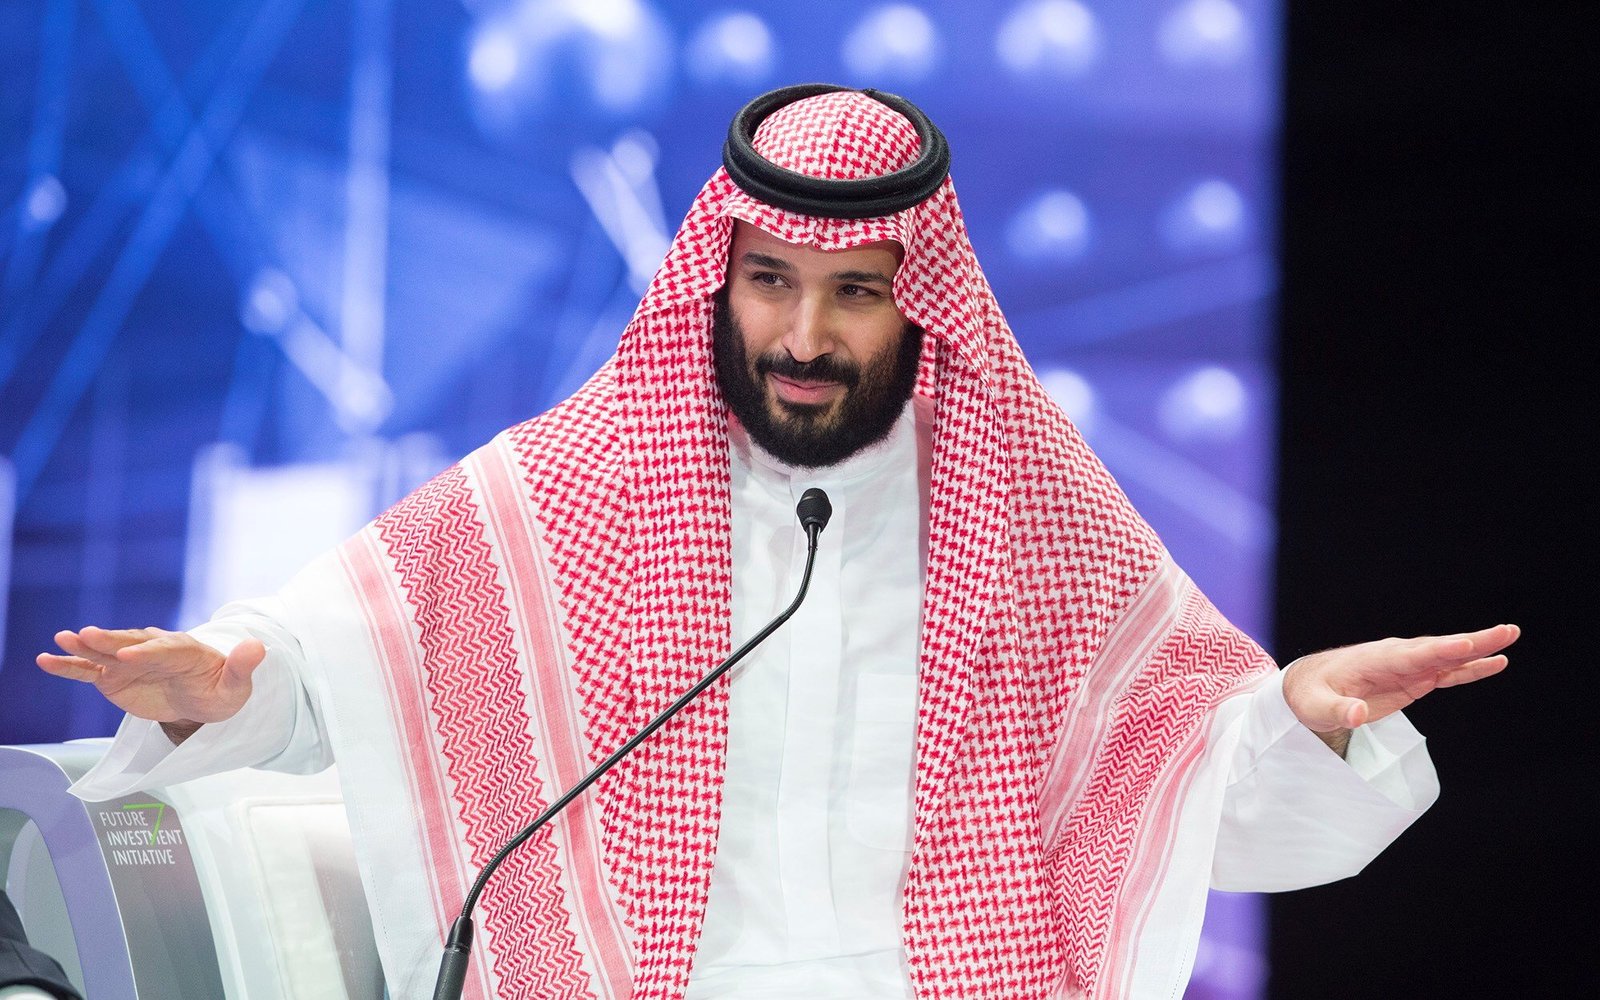 El príncipe heredero saudí, Mohamed bin Salman. (ARCHIVO)